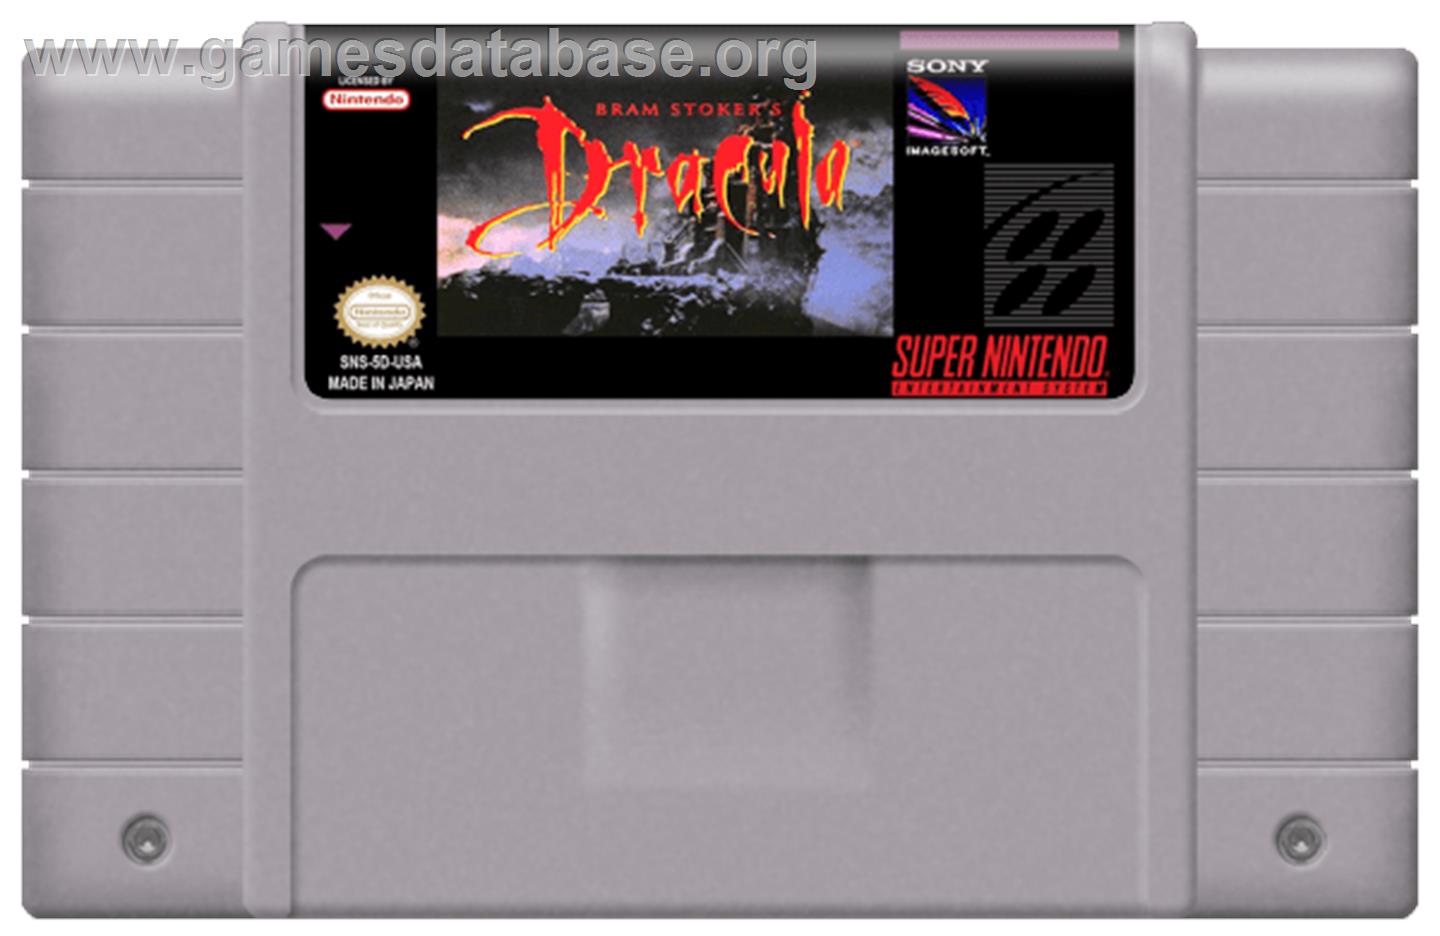 Bram Stoker's Dracula - Nintendo SNES - Artwork - Cartridge